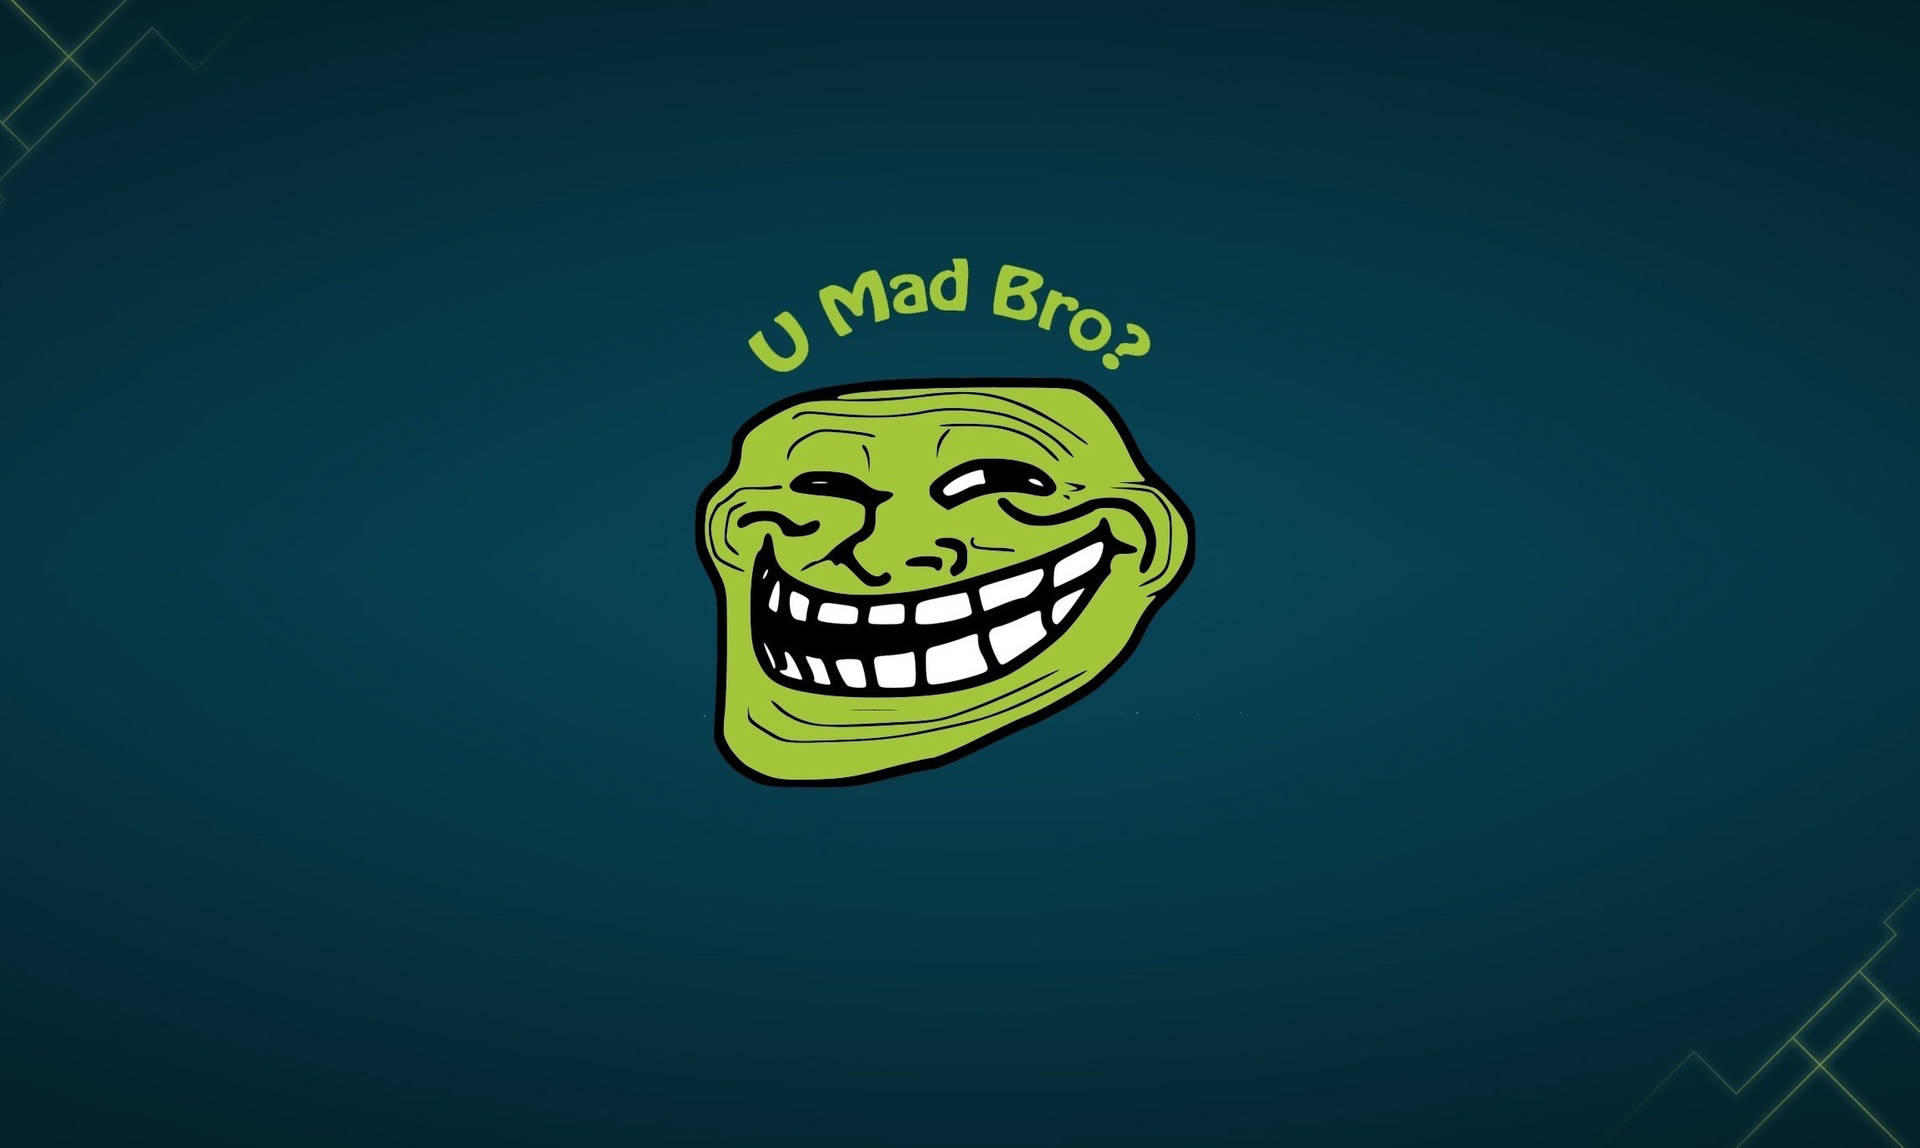 Green Trollface meme that says 